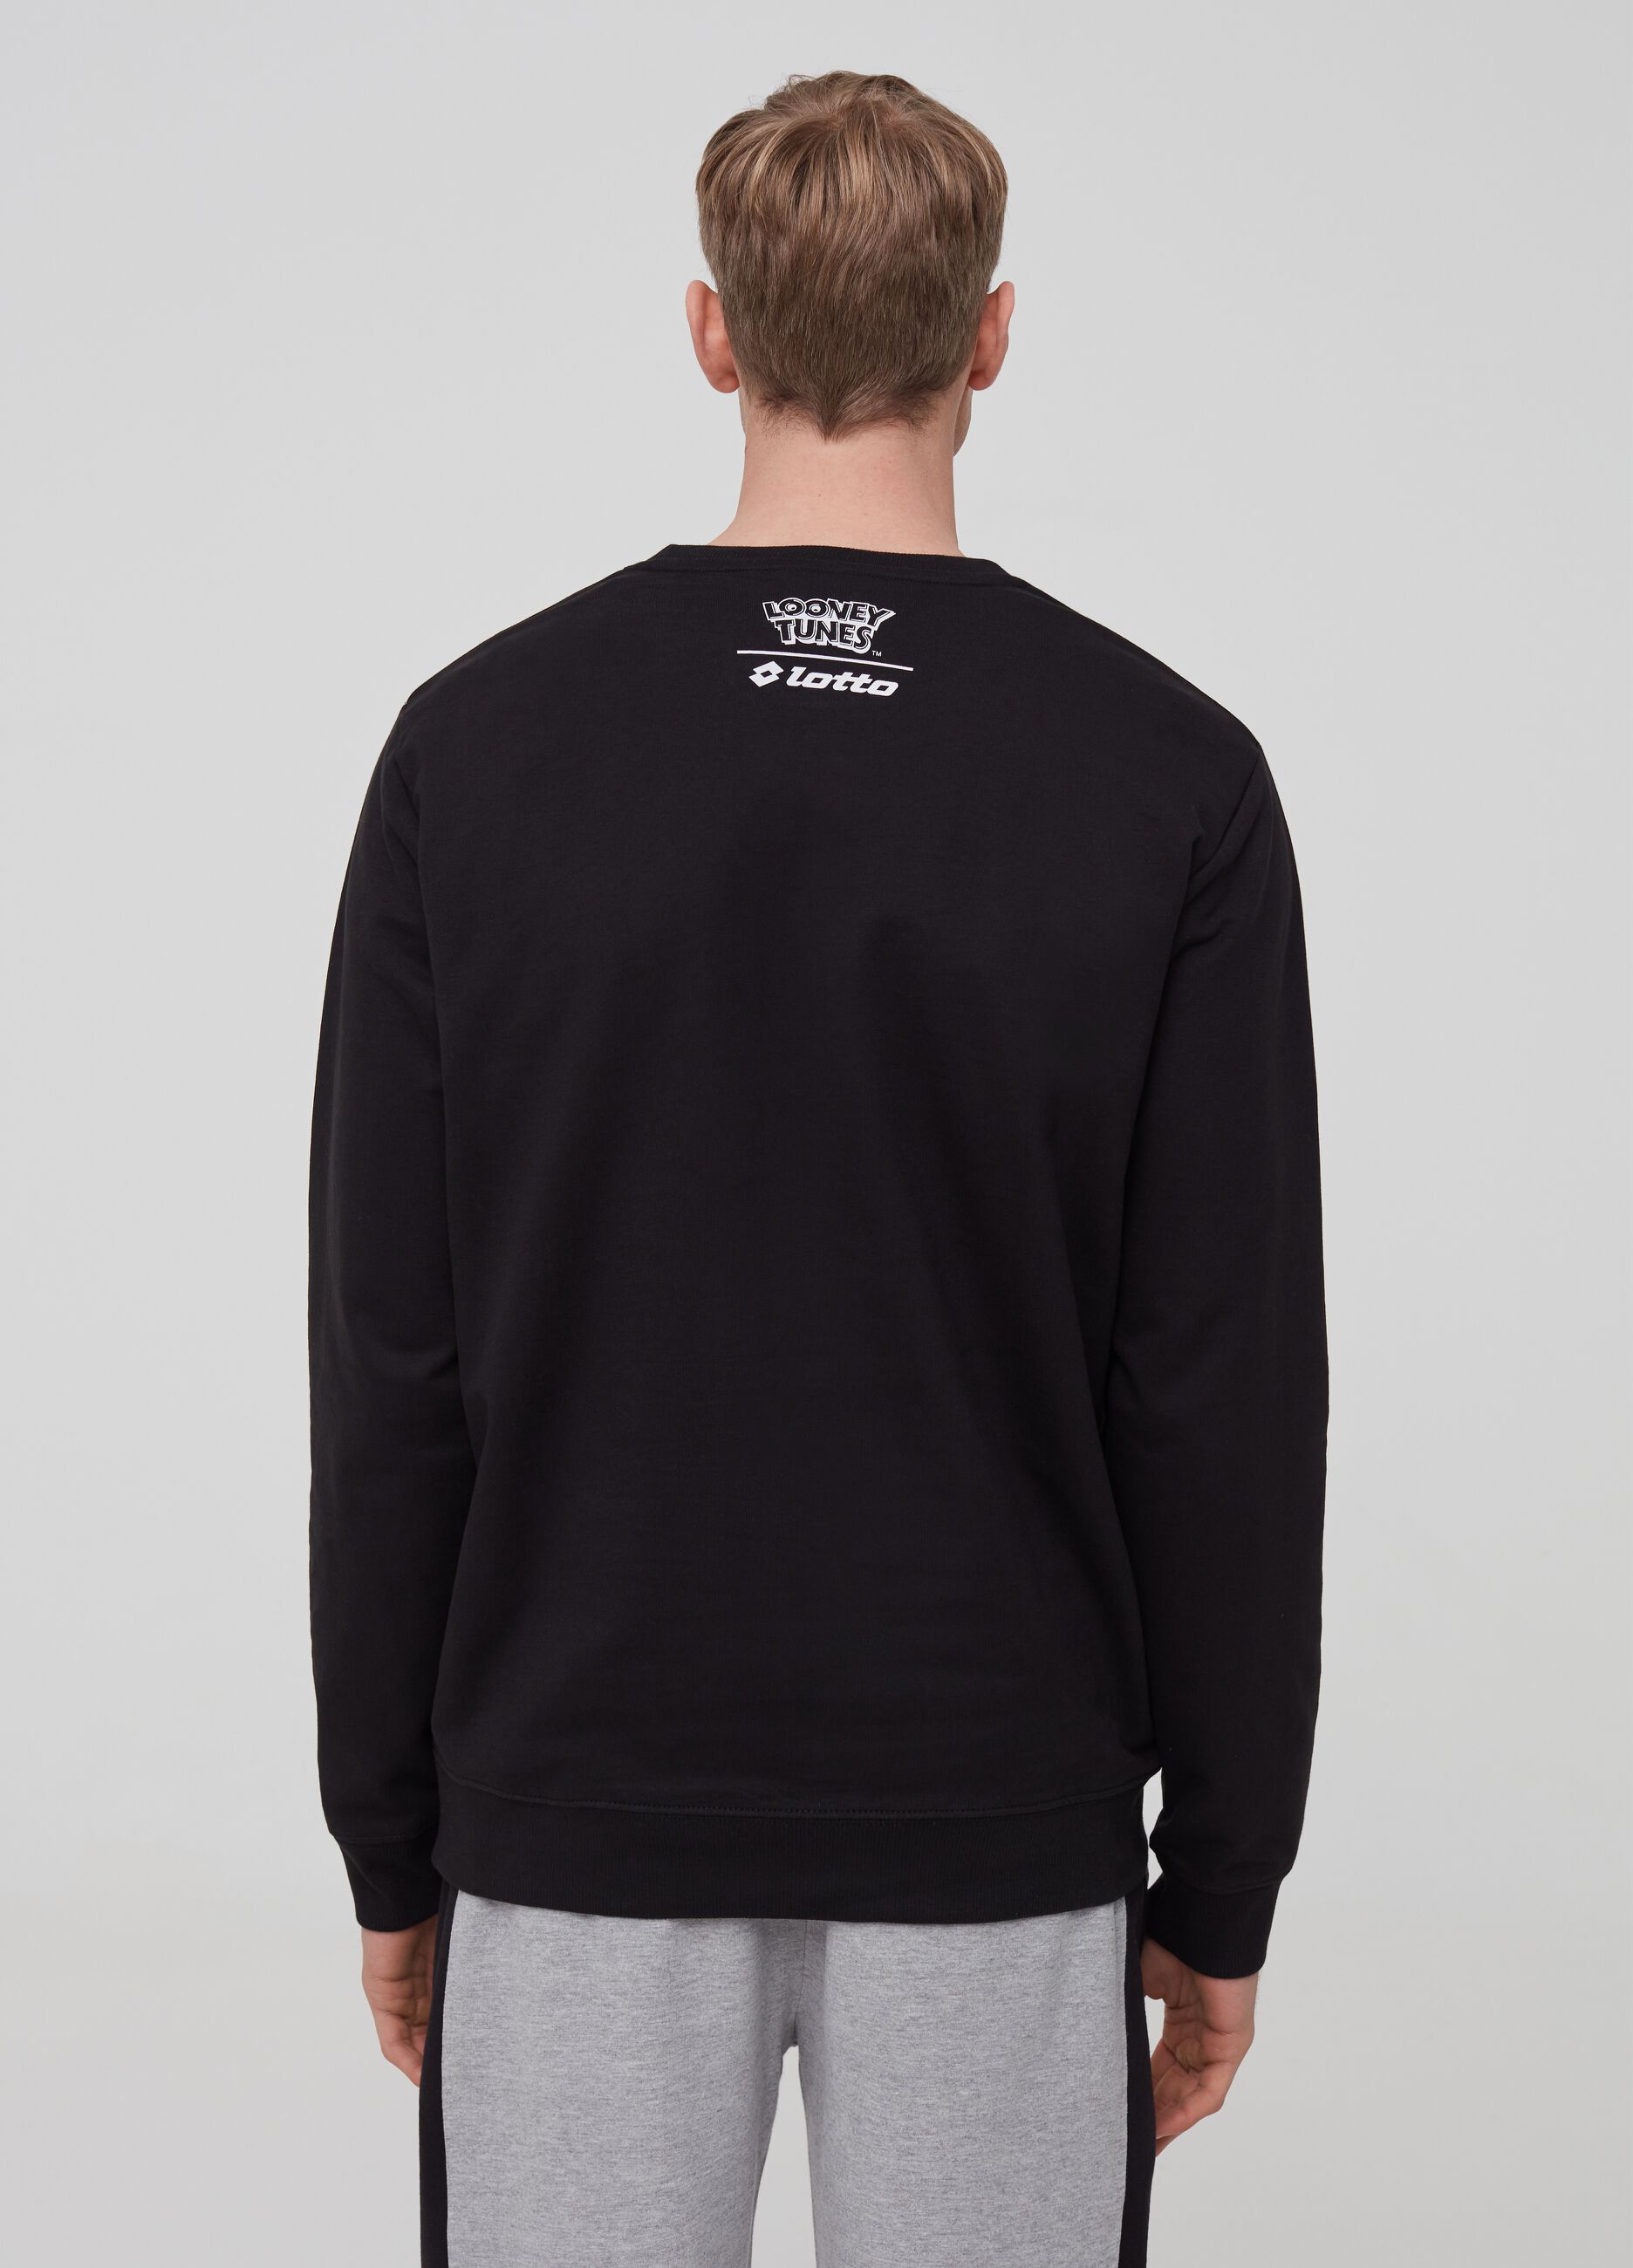 Sweatshirt with Lotto print